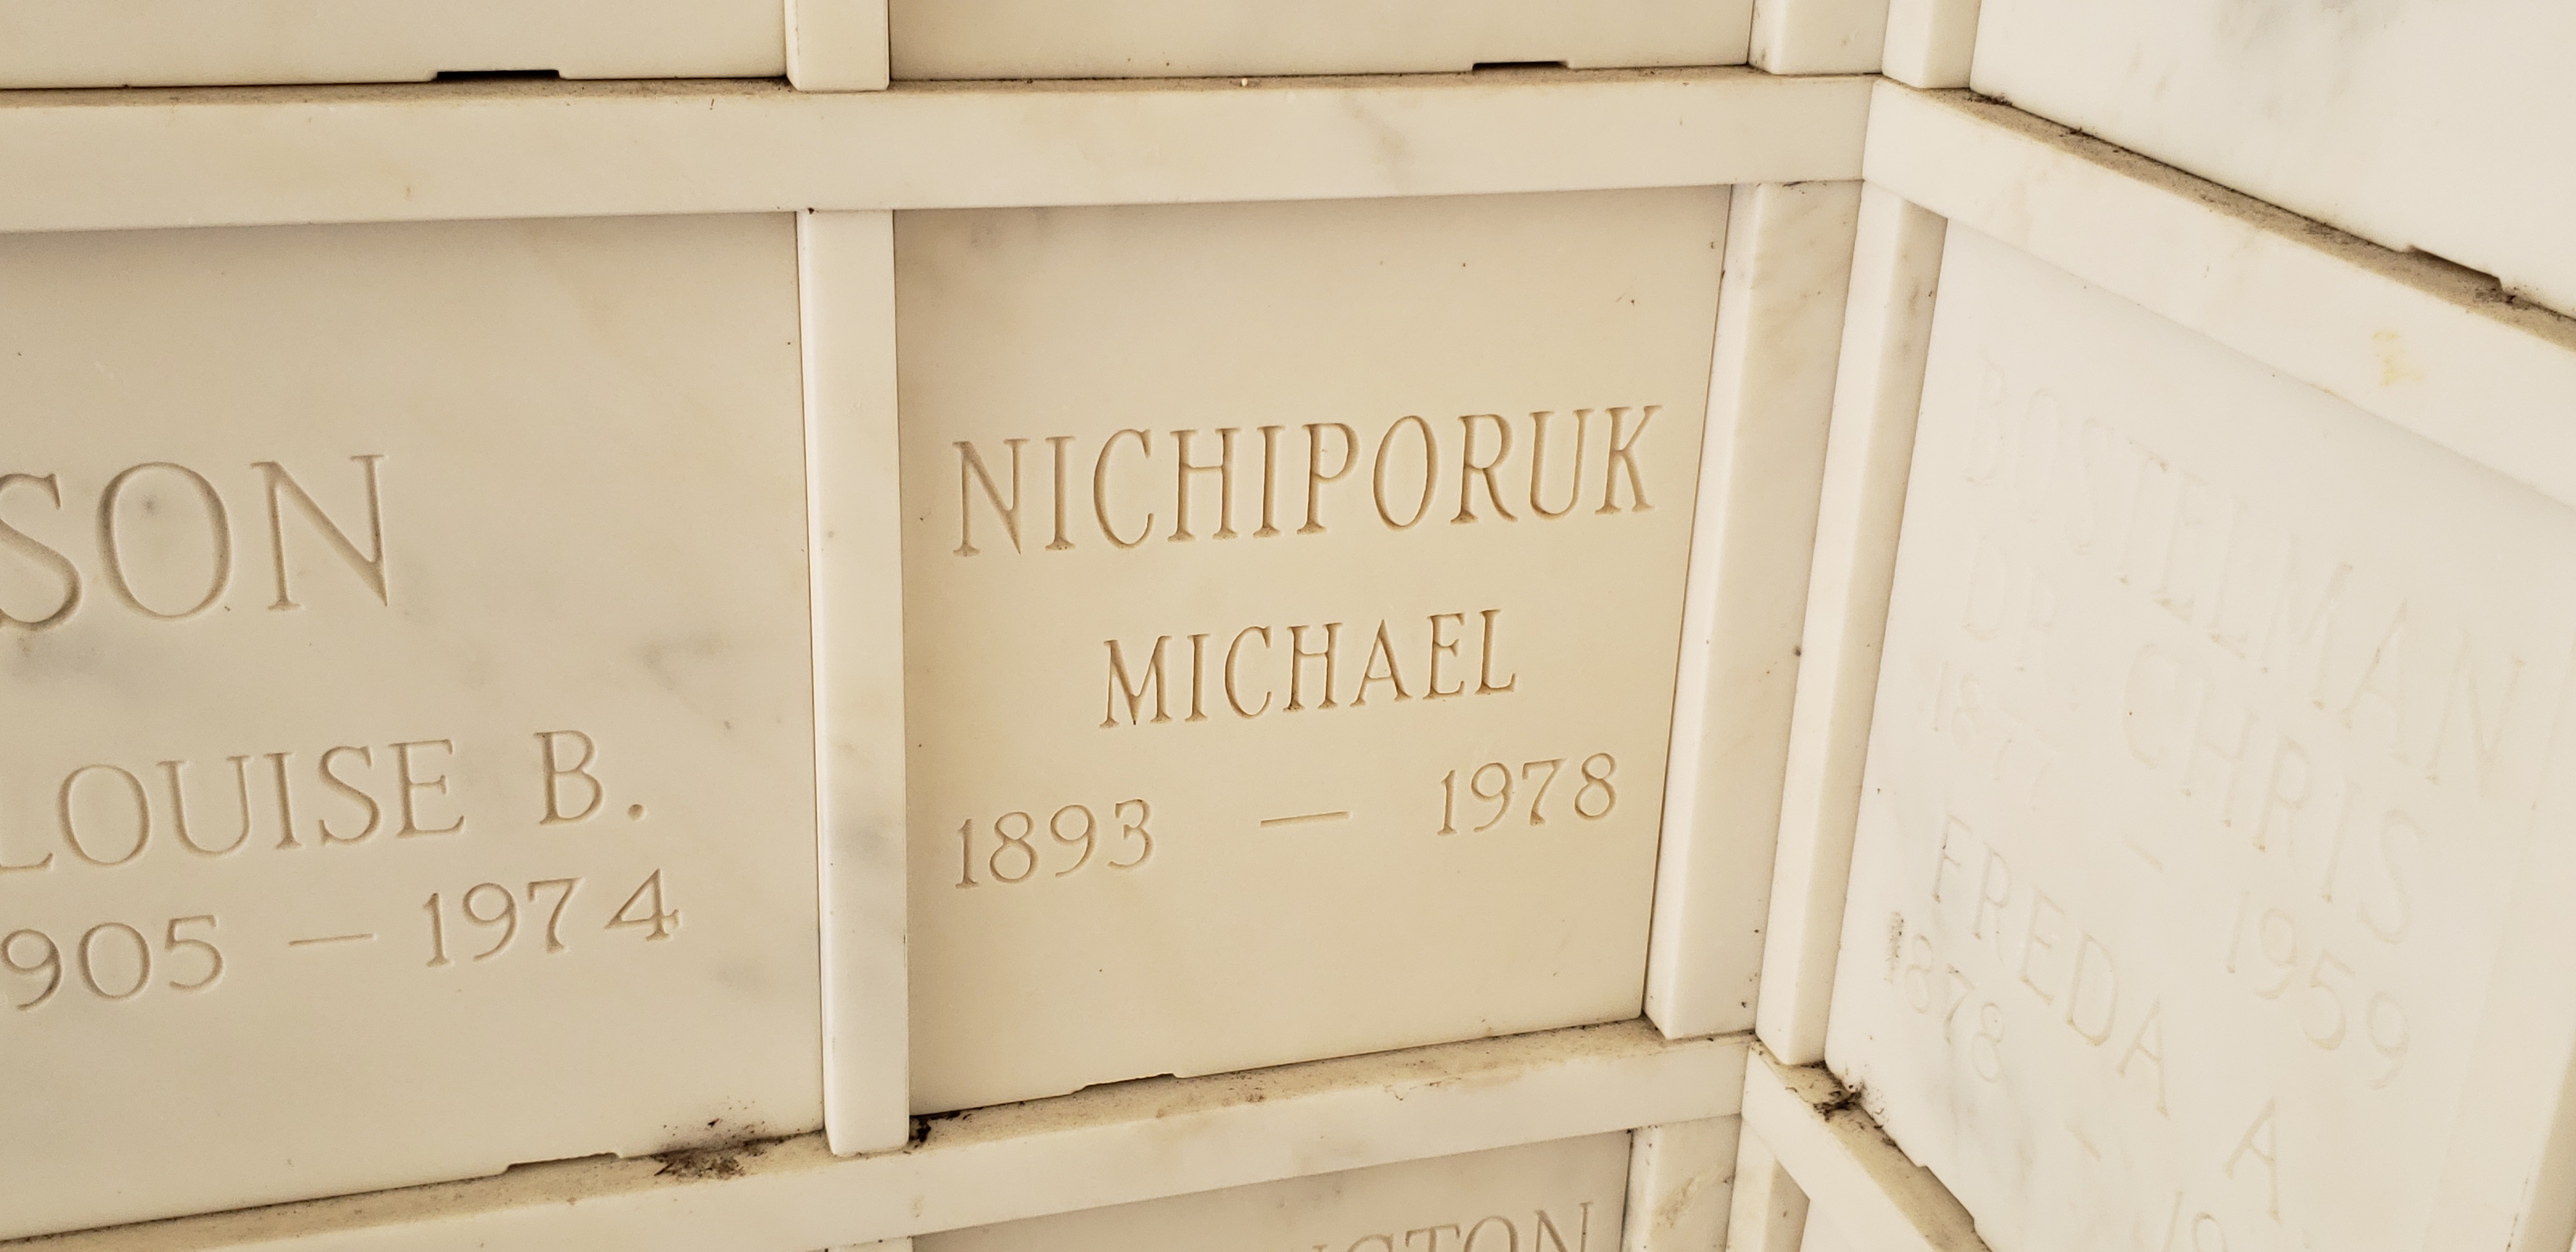 Michael Nichiporuk